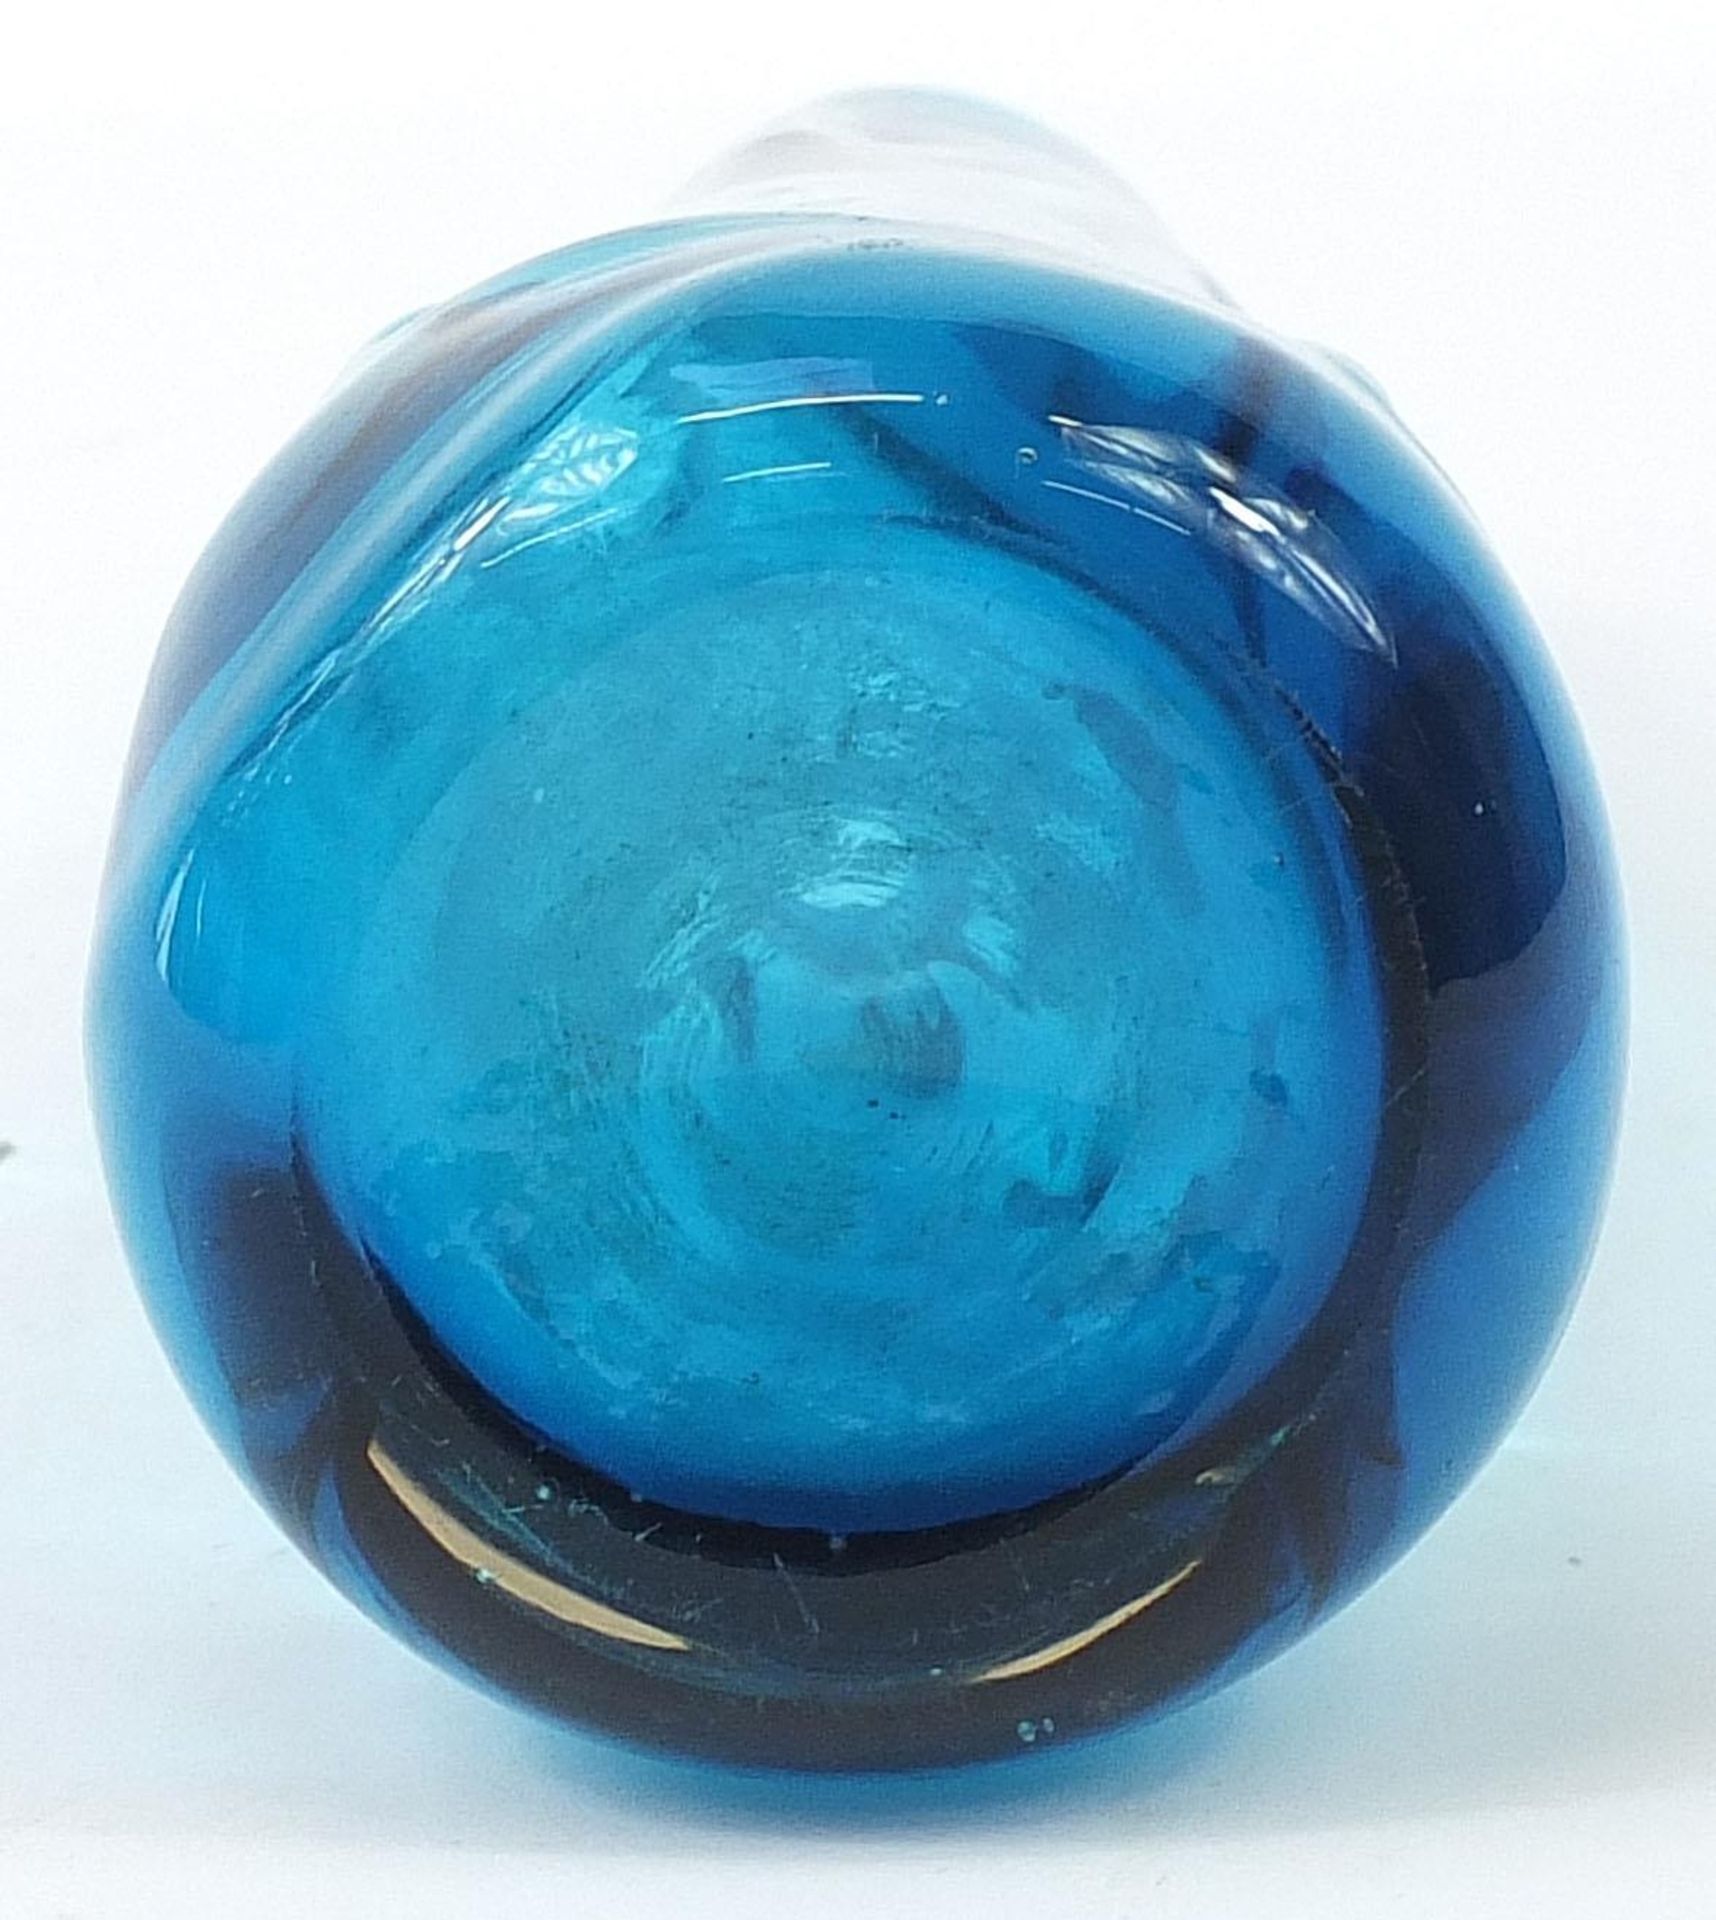 Whitefriars aqua blue knobbly glass vase, 25cm high - Image 3 of 3